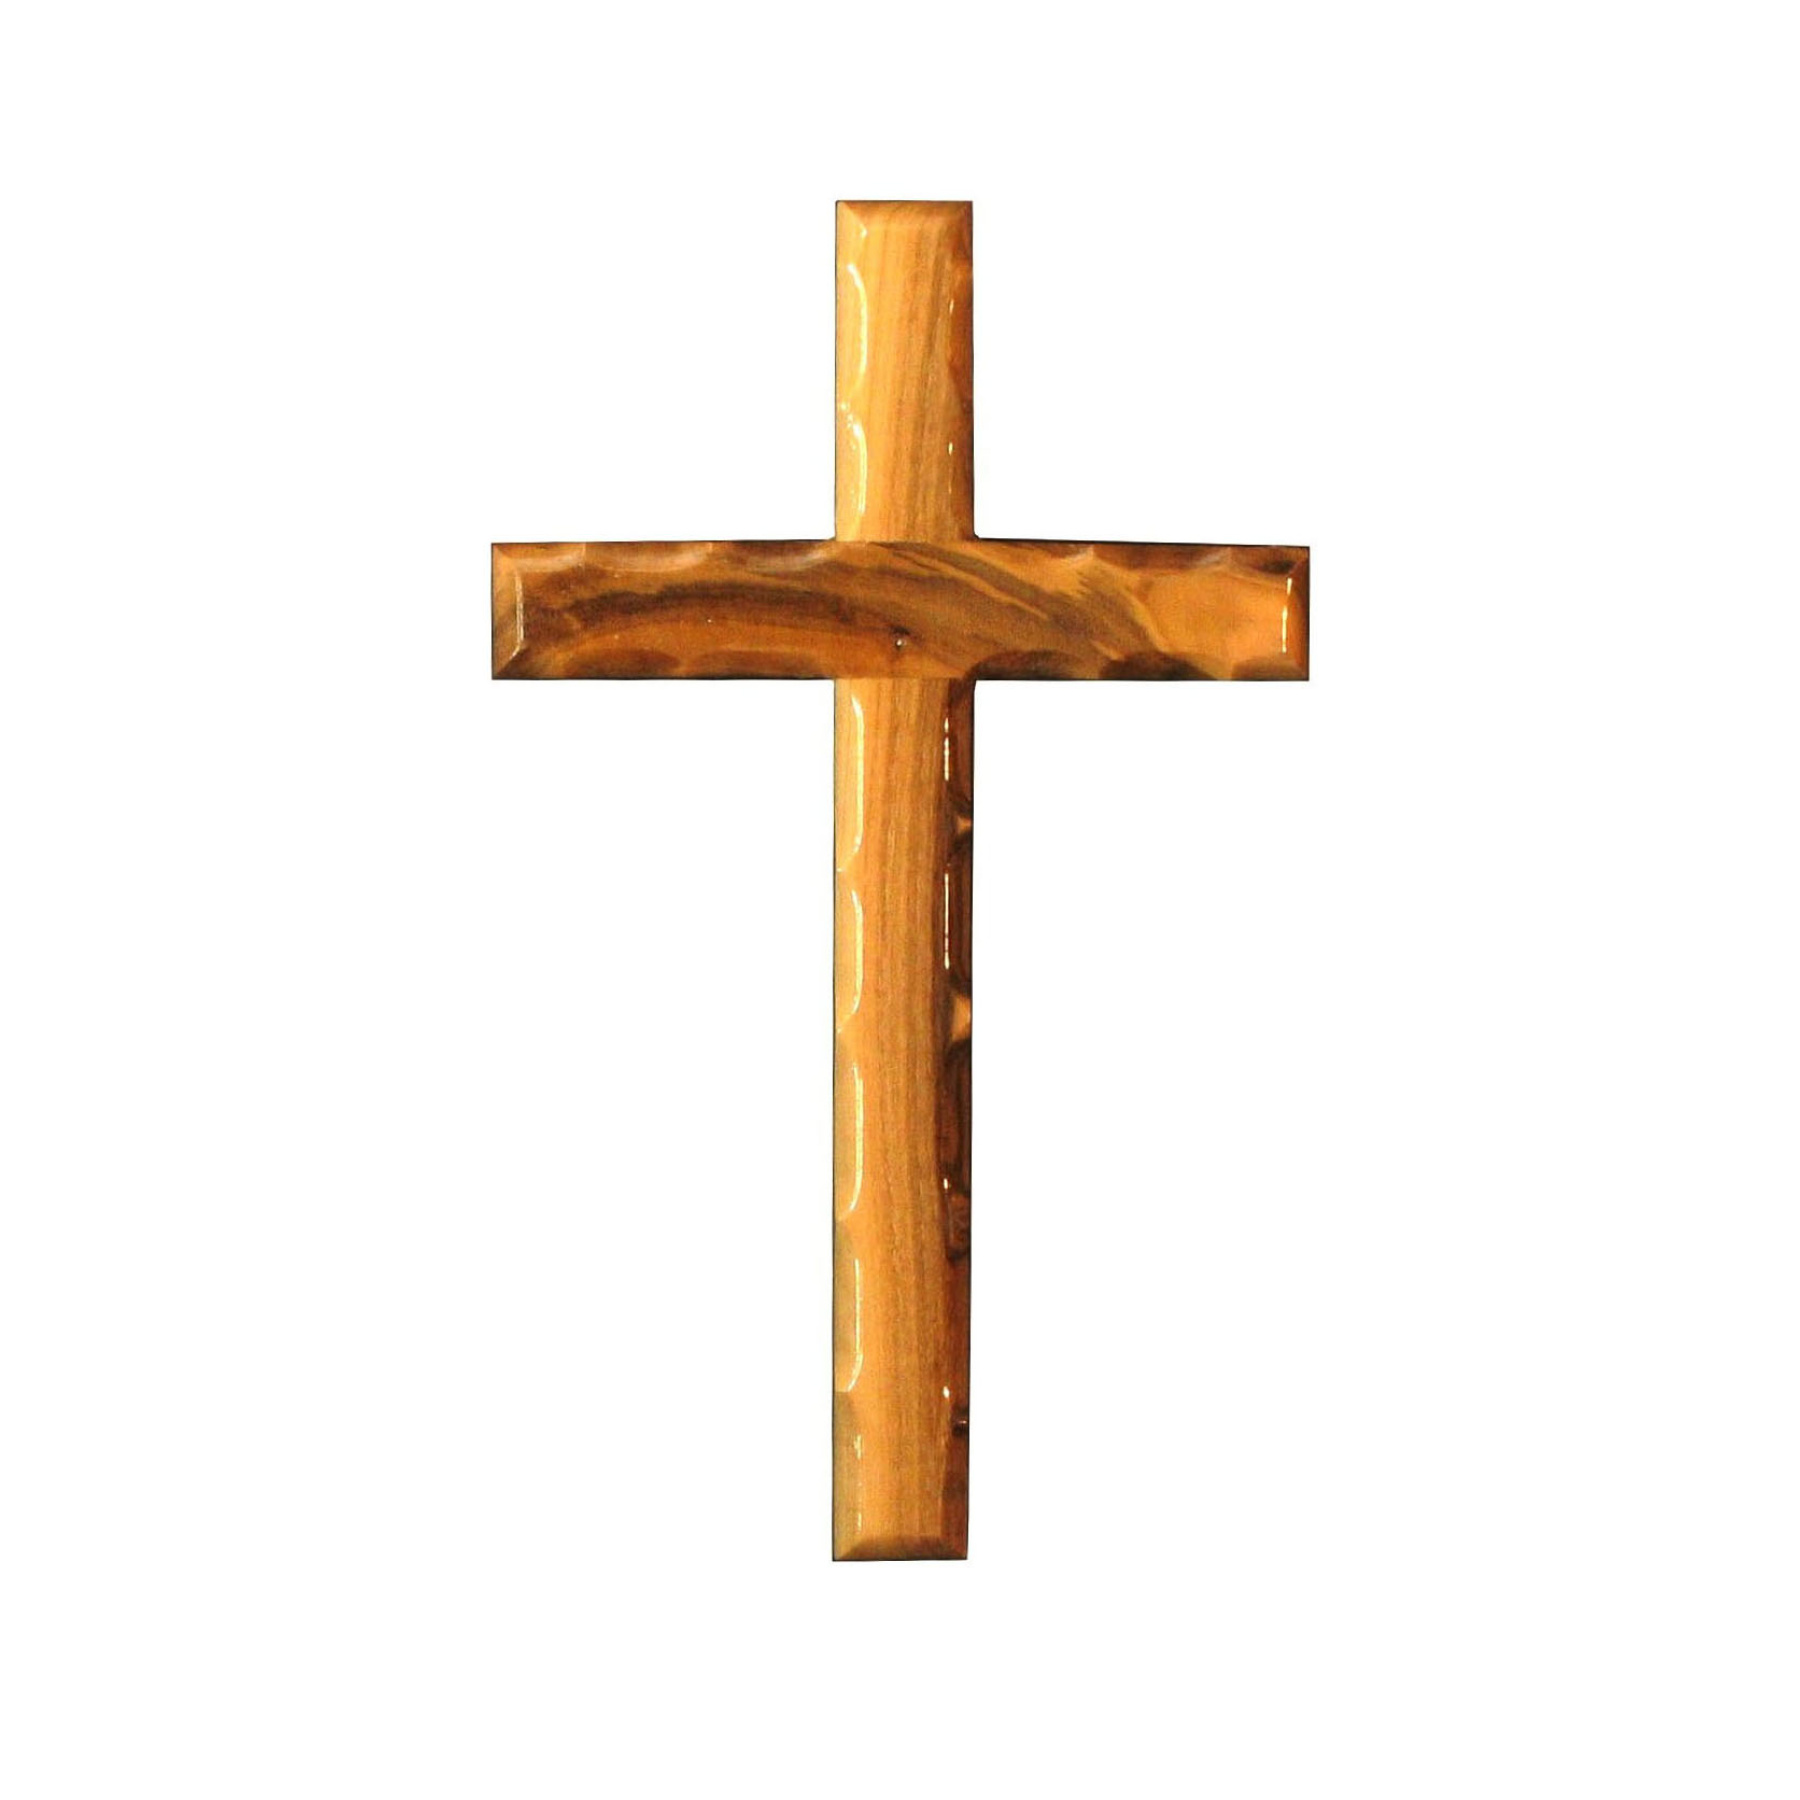 Small crosses